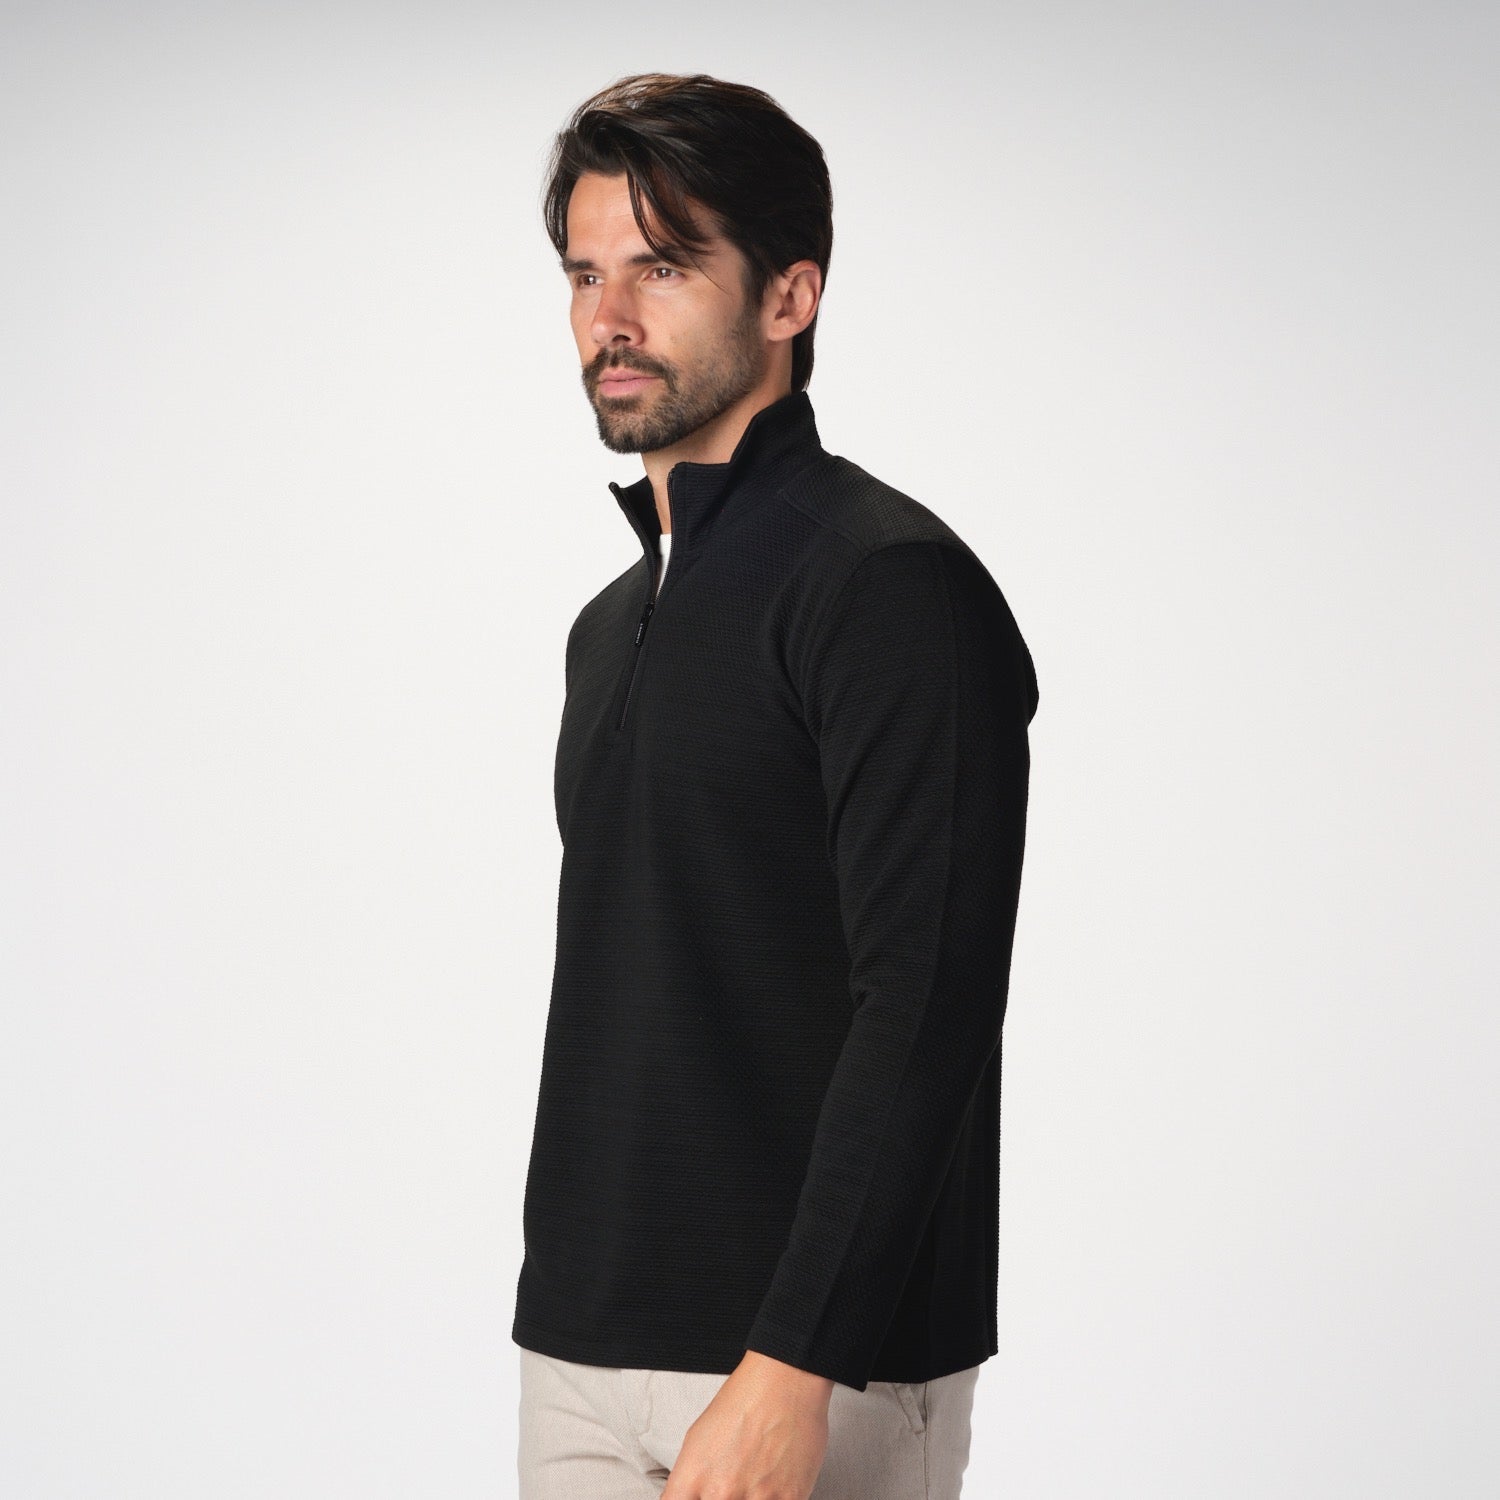 Luxury Tech Quarter Zip Black Jersey Sweater